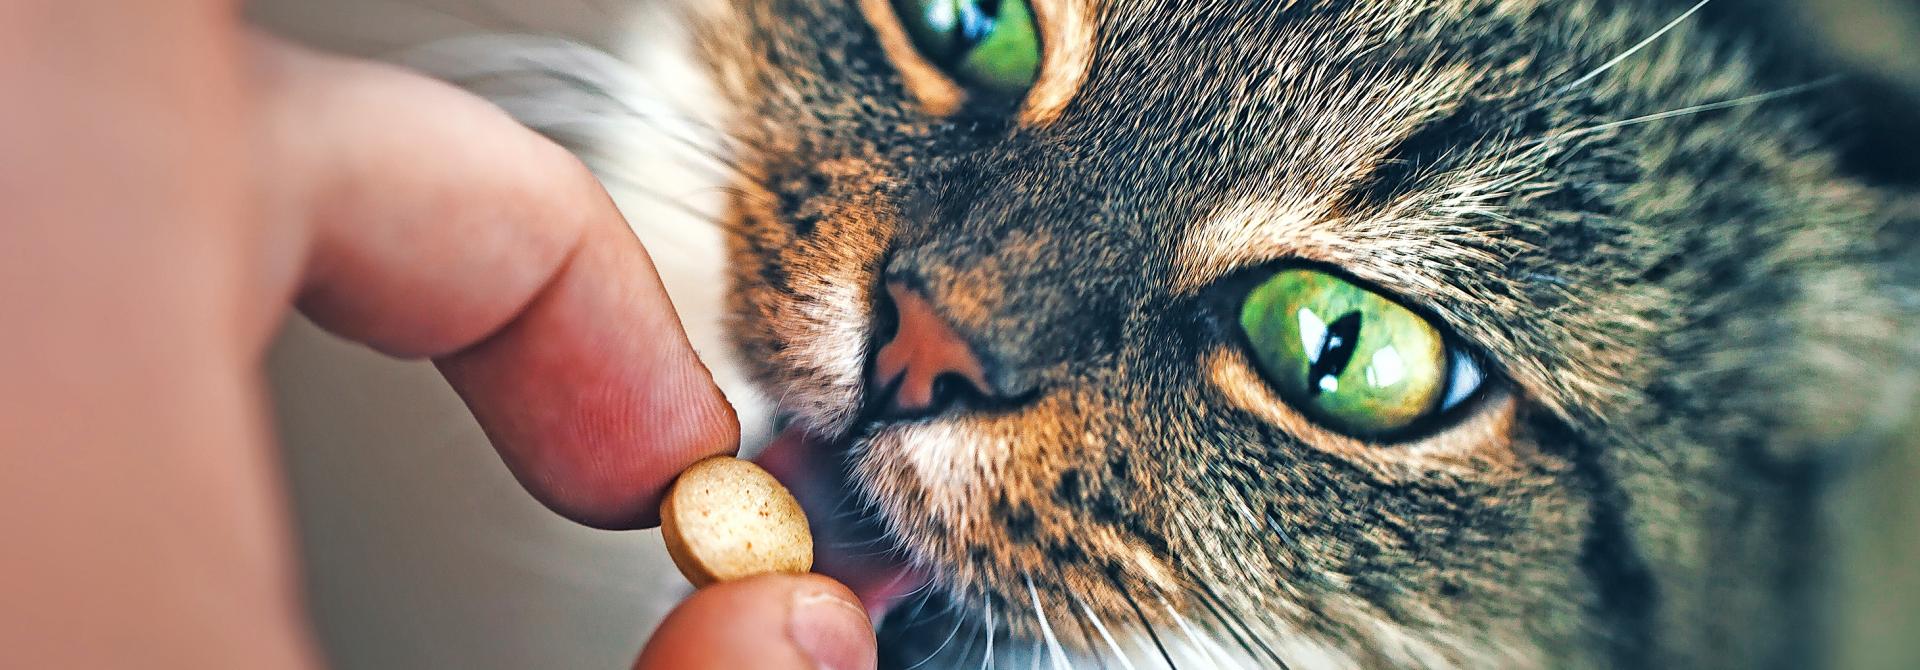 Frau gibt Katze Pille